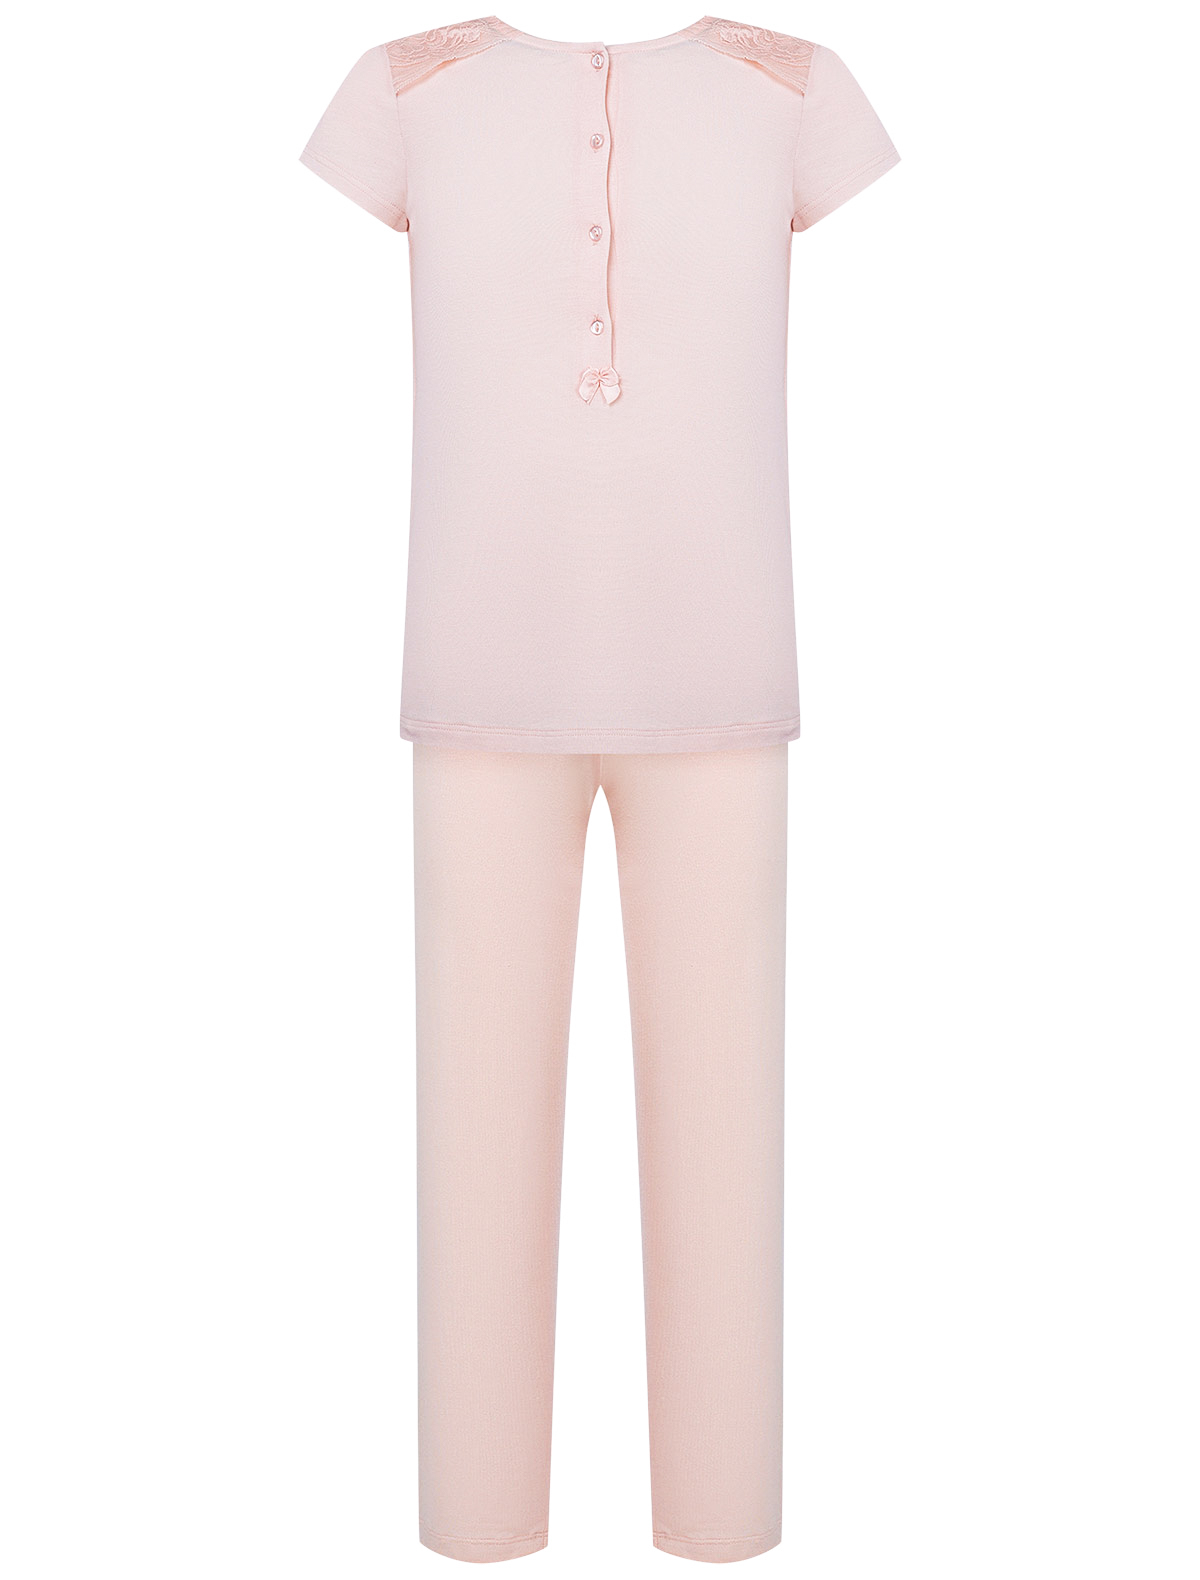 Пижама Sognatori розового цвета